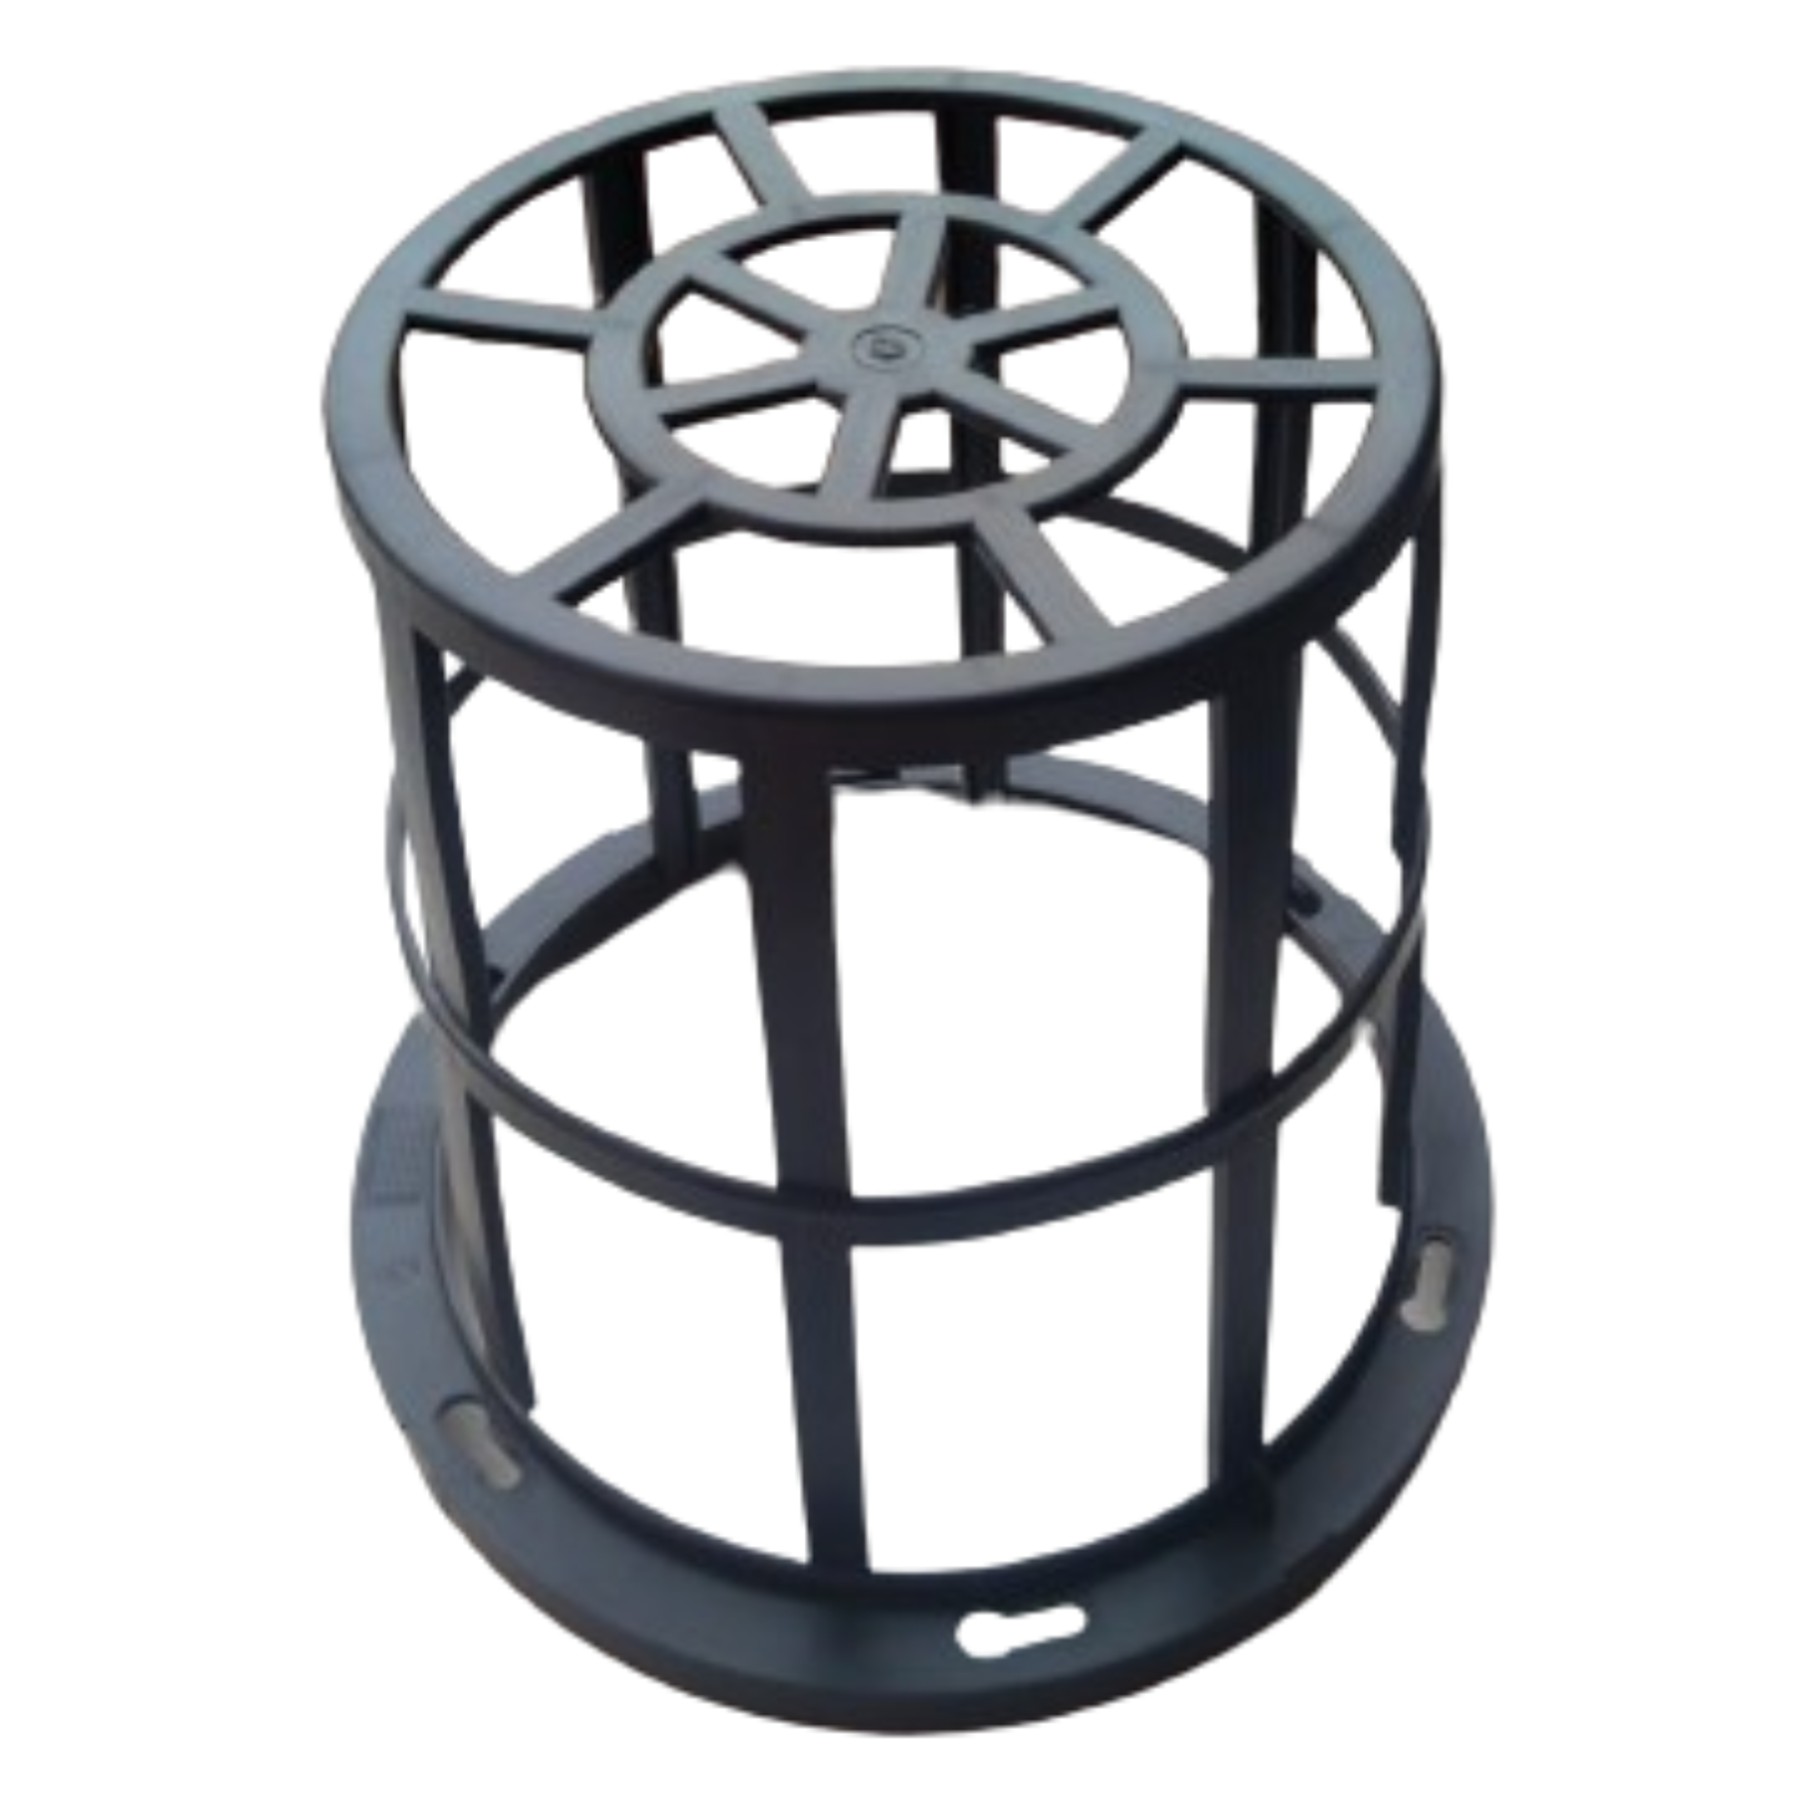 Filter Basket 252mm CPTF252